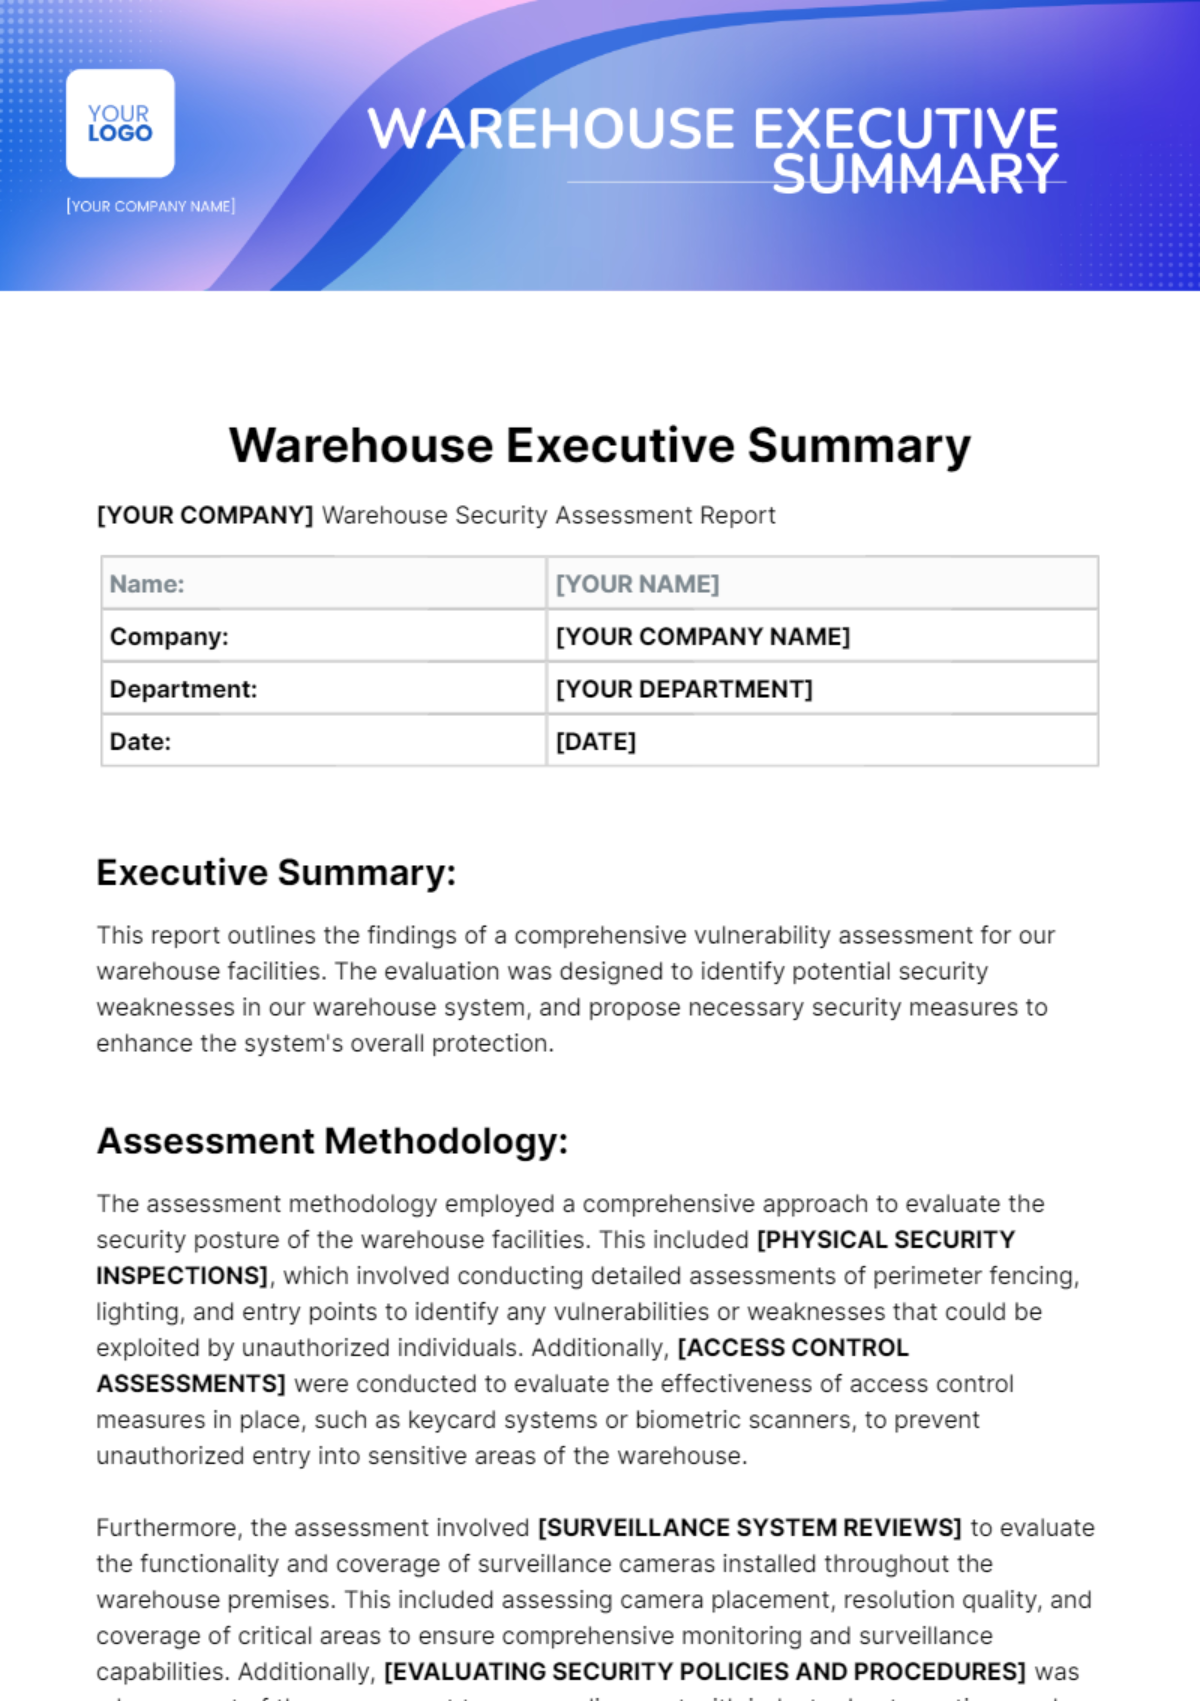 Warehouse Executive Summary Template